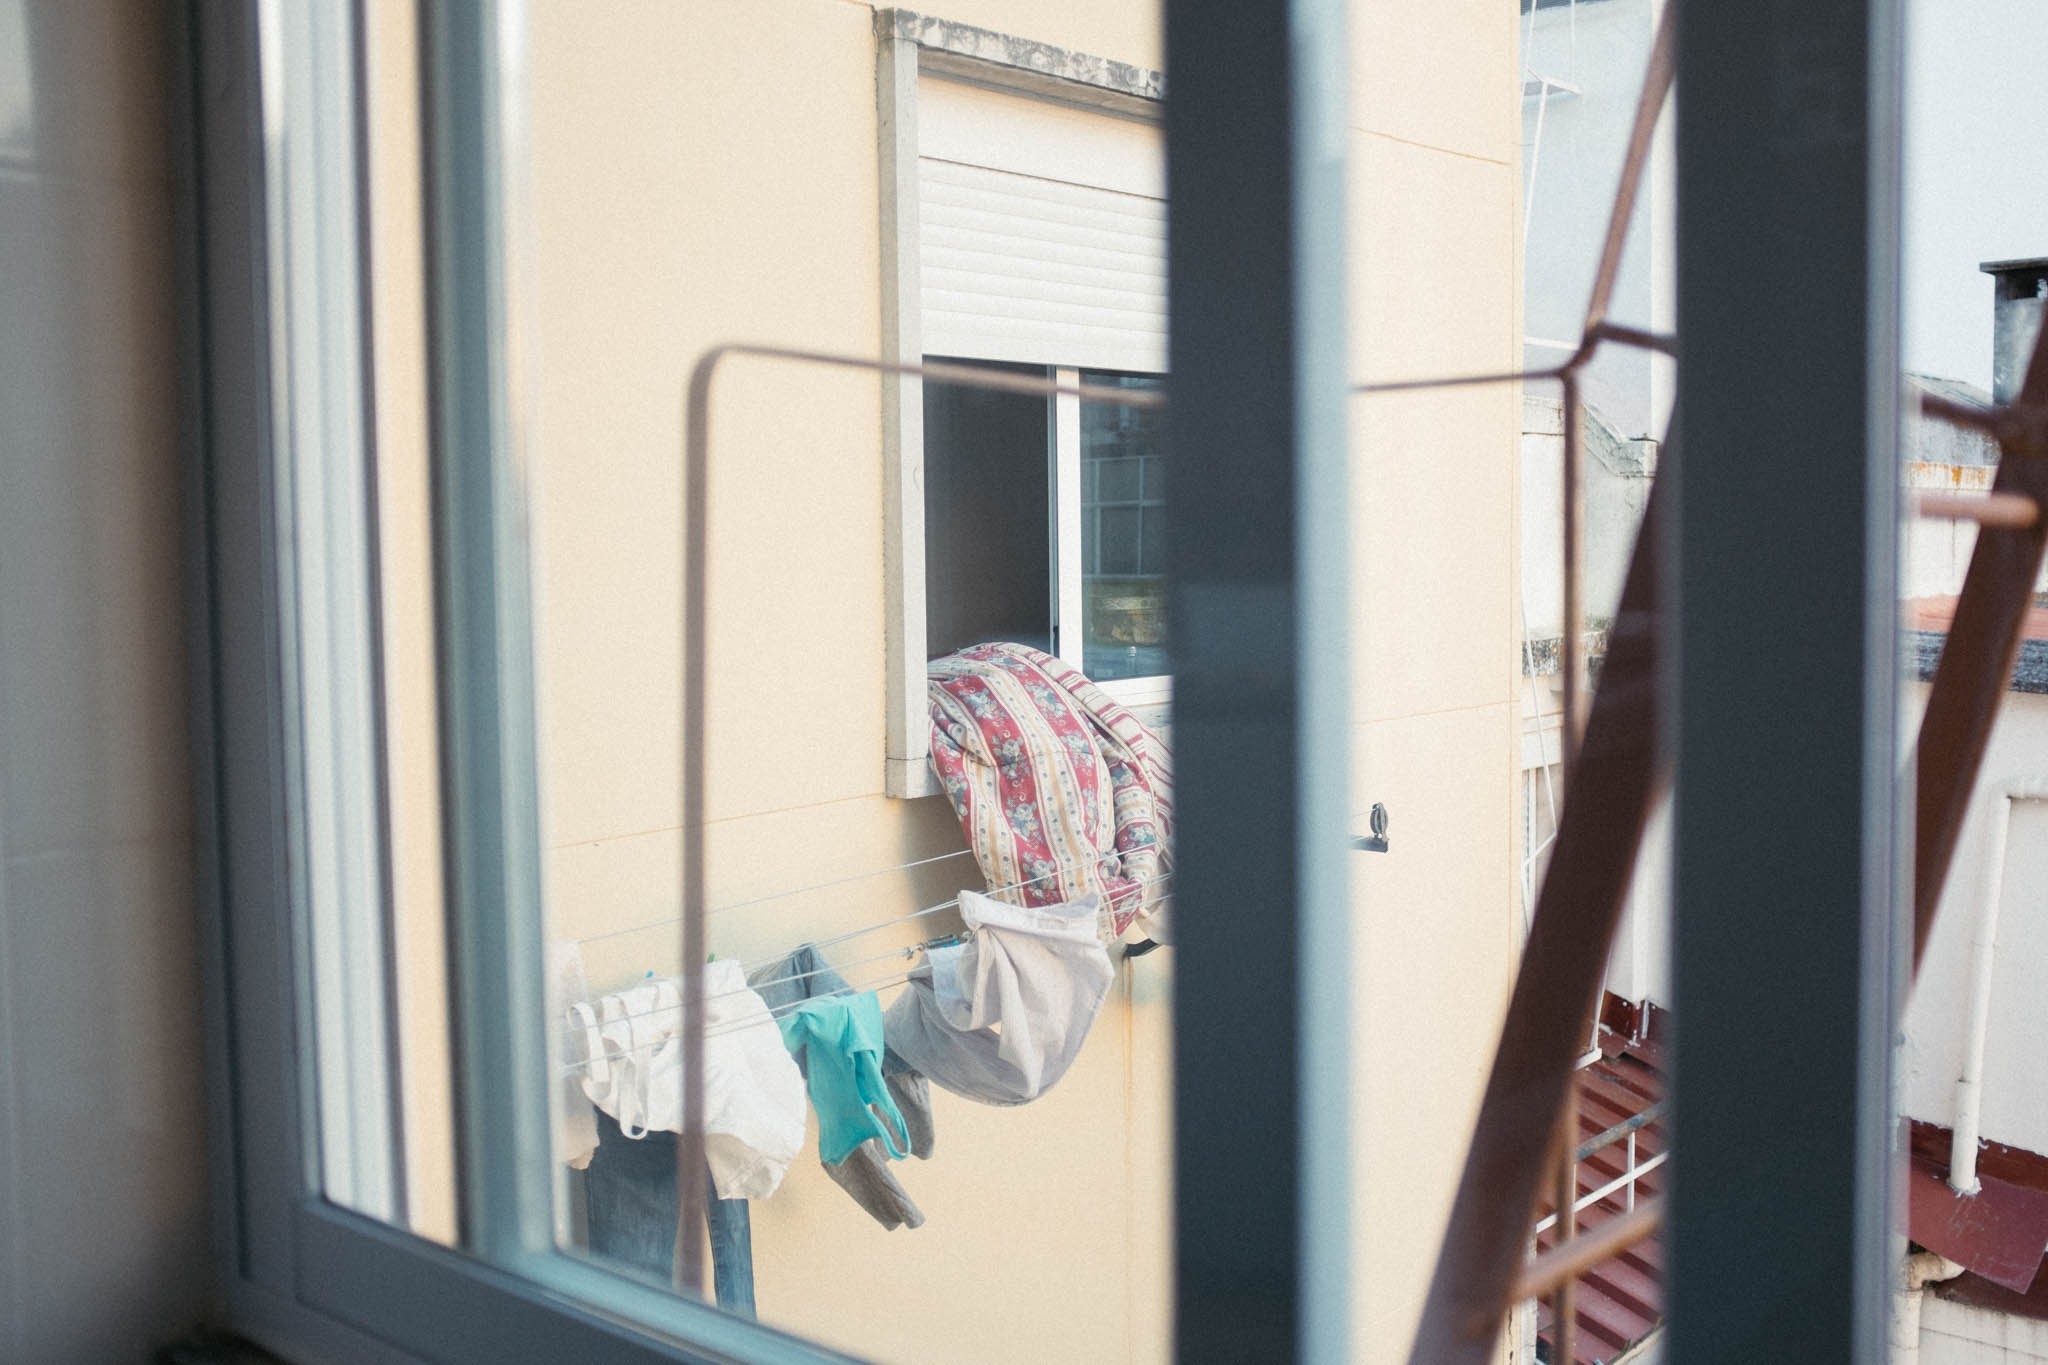 Neighboors' laundry.